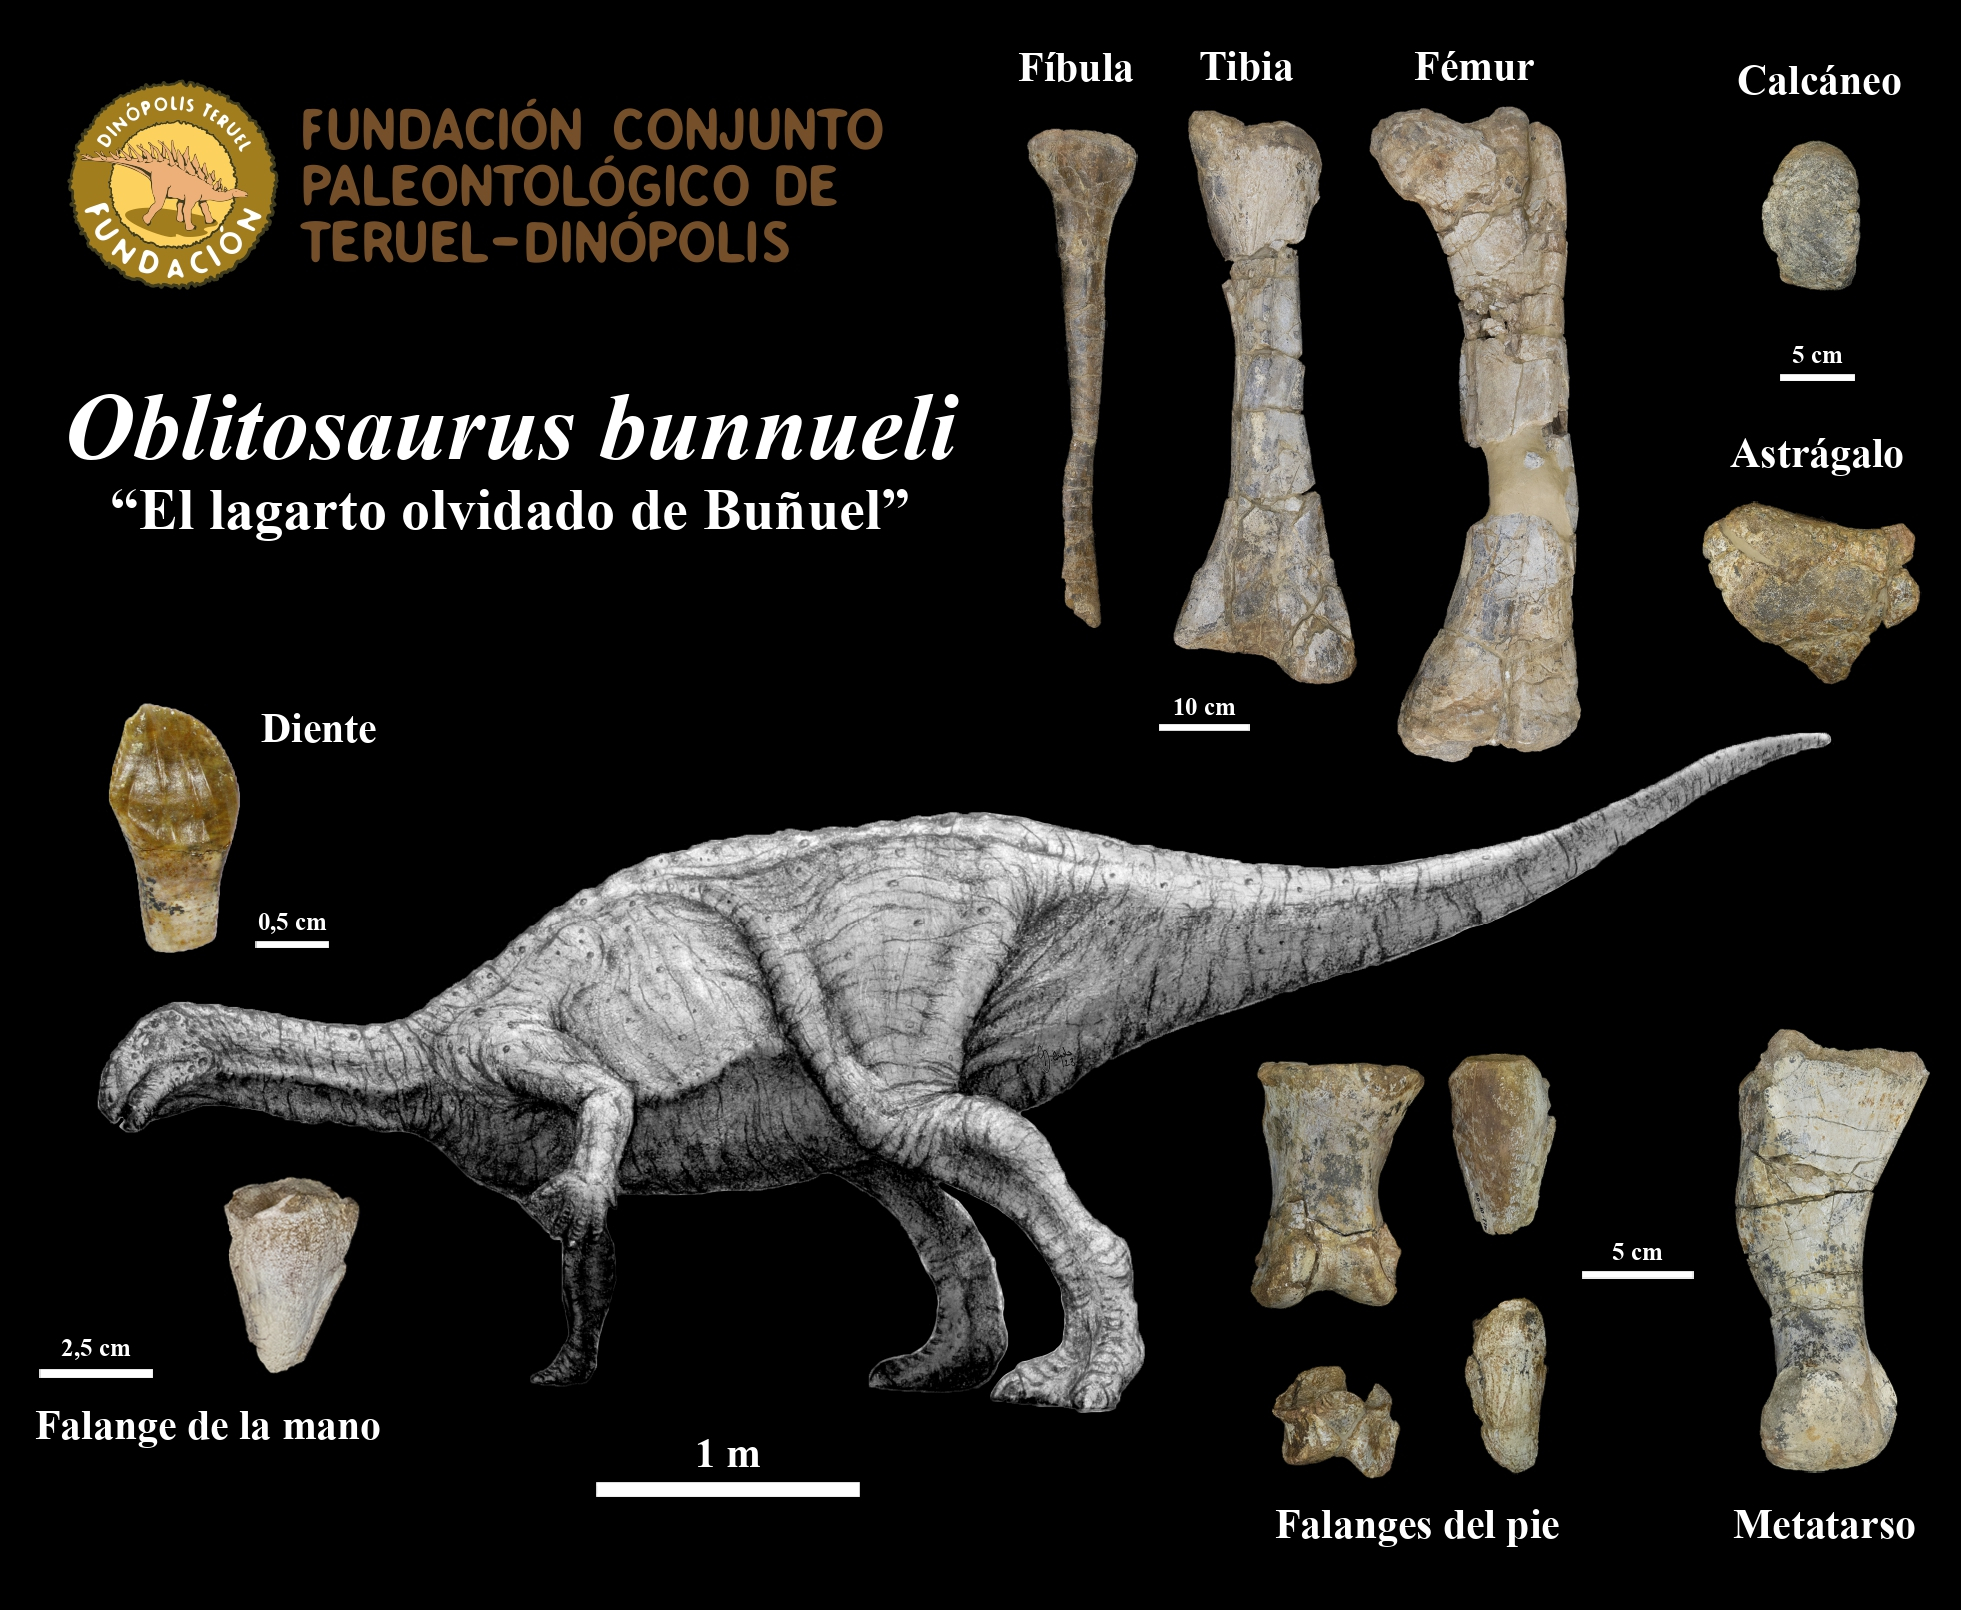 Oblitosaurus Bunnueli and its fossils.